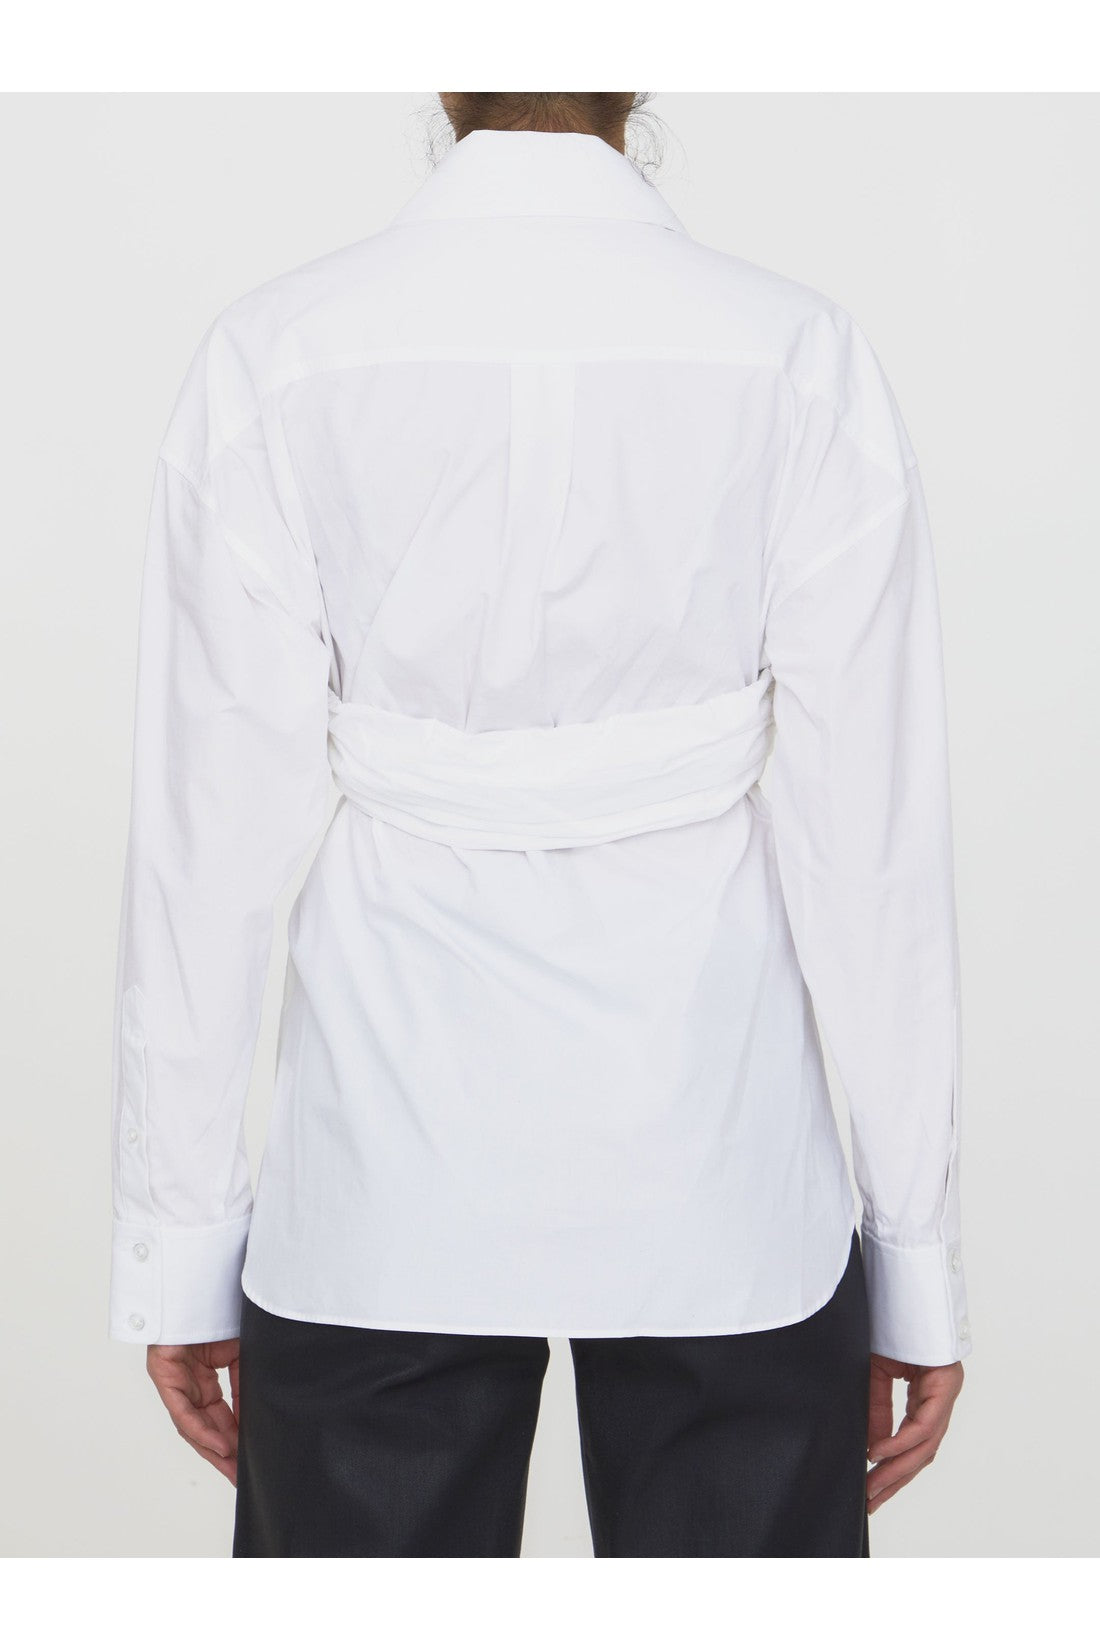 Ruched white shirt